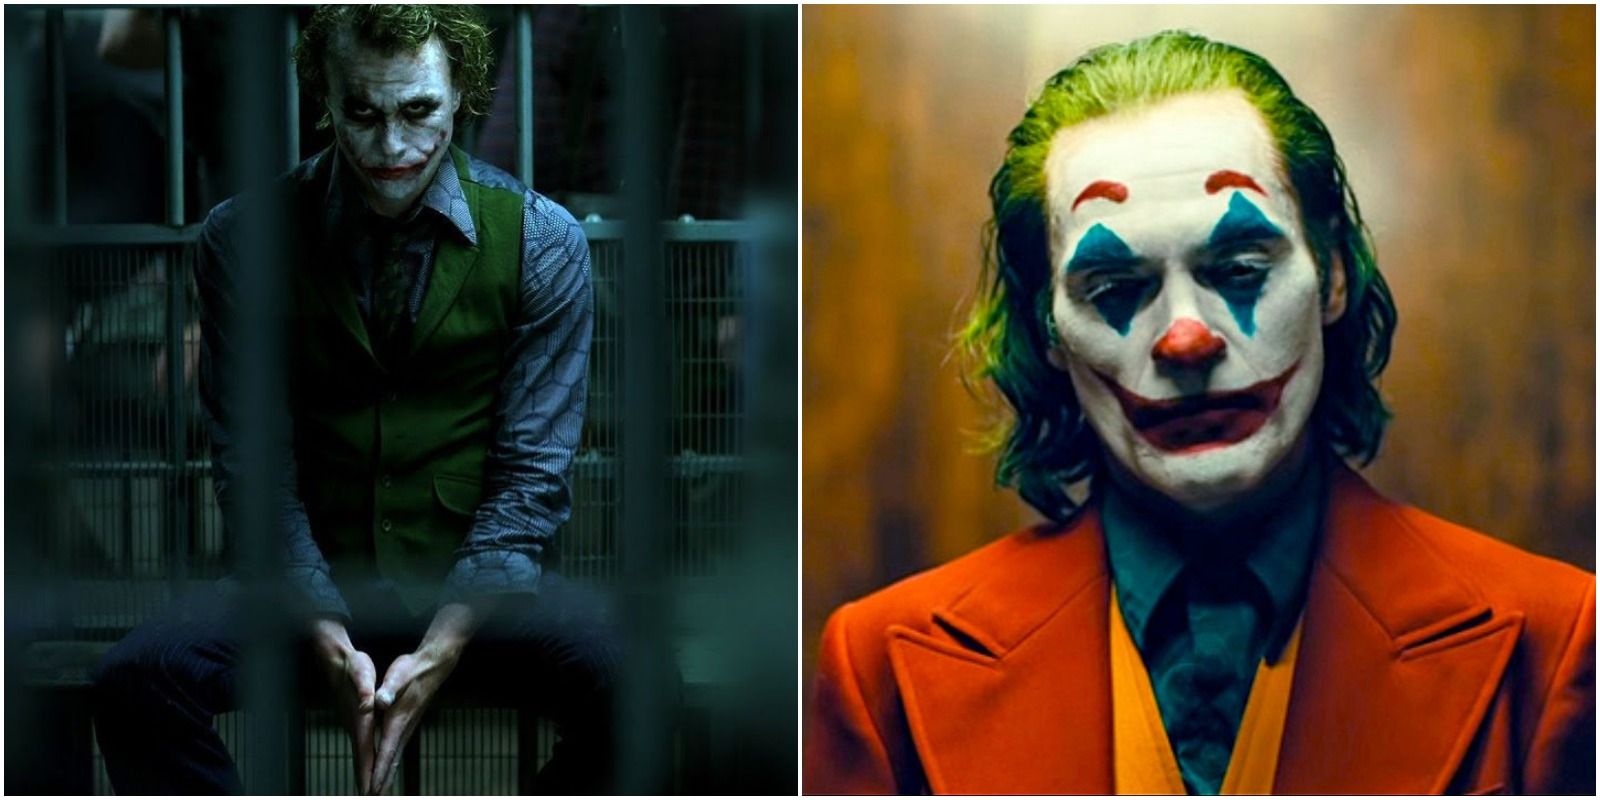 Heath Ledger and Joaquin Phoenix as the Joker in The Dark Knight and Joker respectively